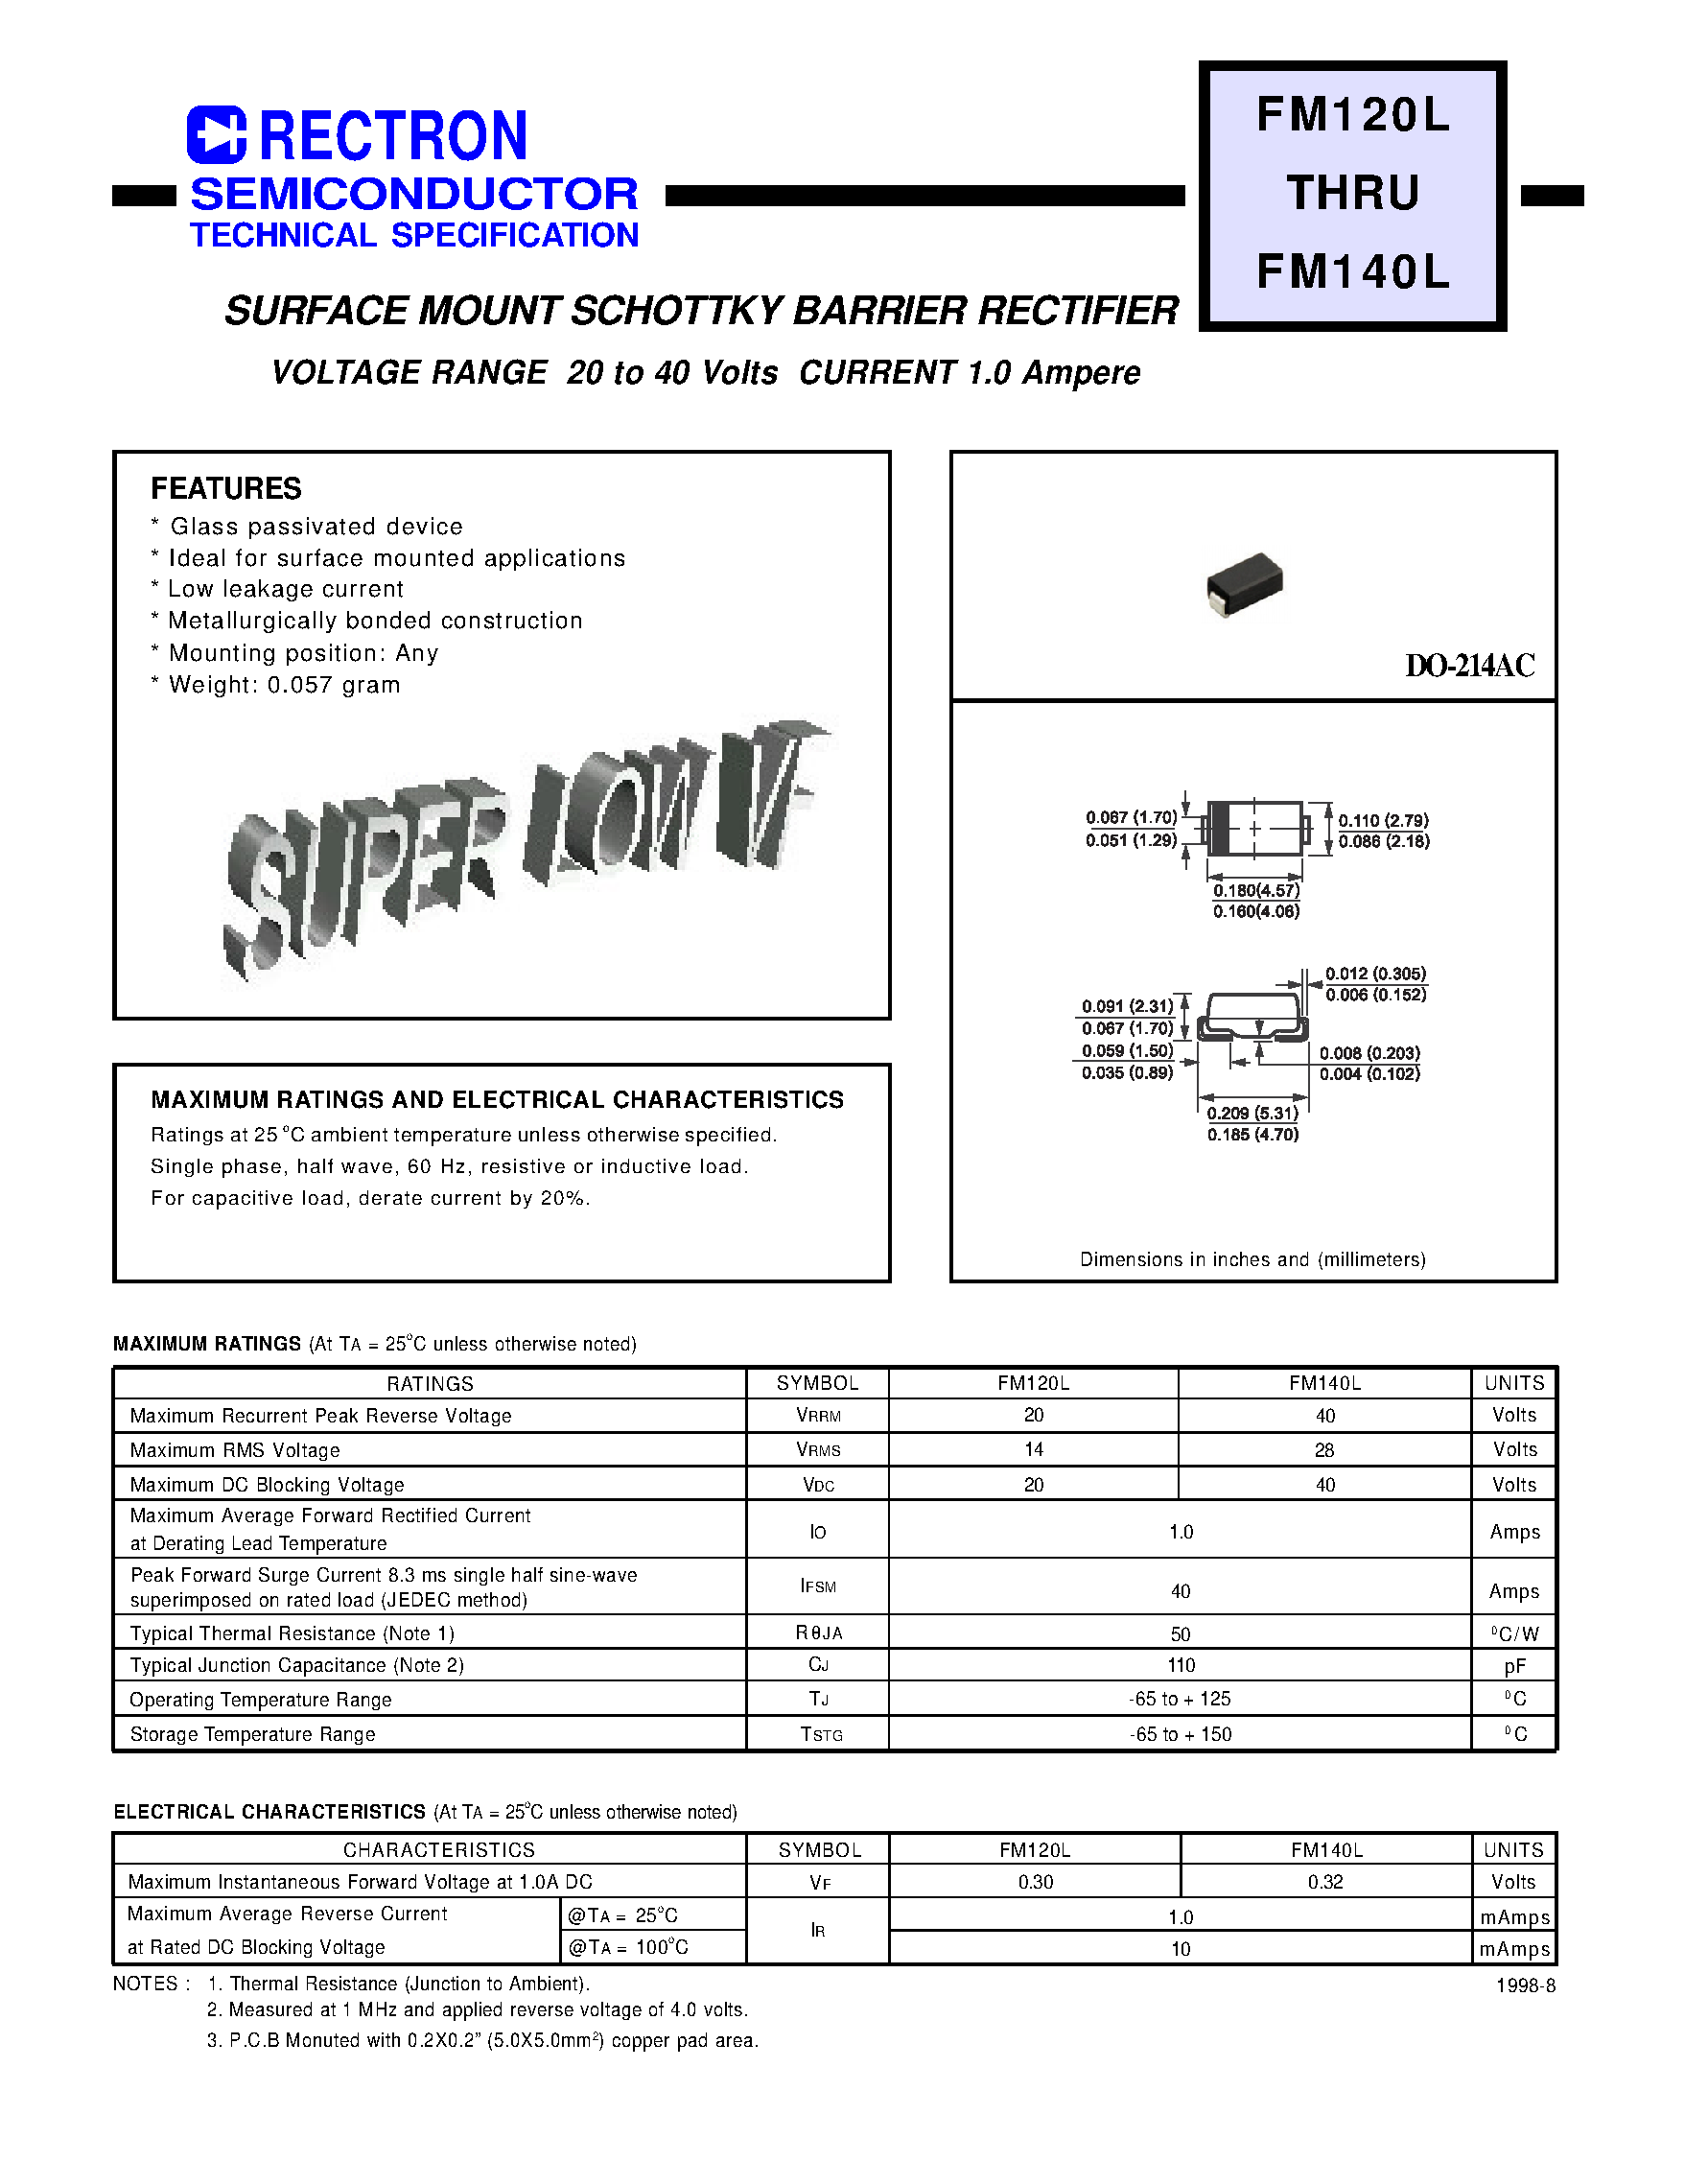 Datasheet FM120L - SURFACE MOUNT SCHOTTKY BARRIER RECTIFIER (VOLTAGE RANGE 20 to 40 Volts CURRENT 1.0 Ampere) page 1